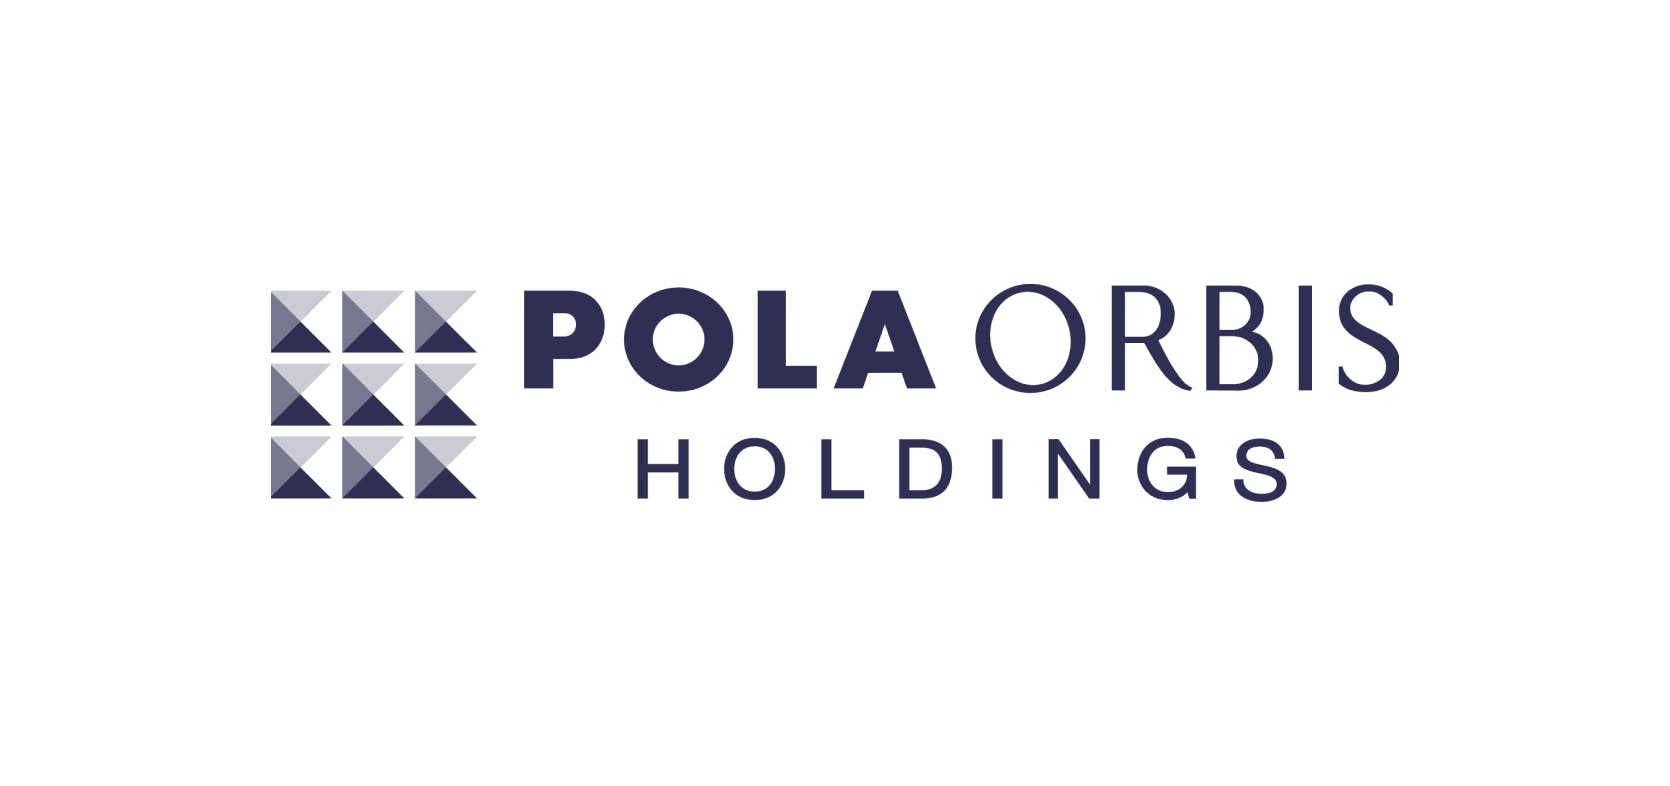 POLA ORBIS HOLDINGS INC.